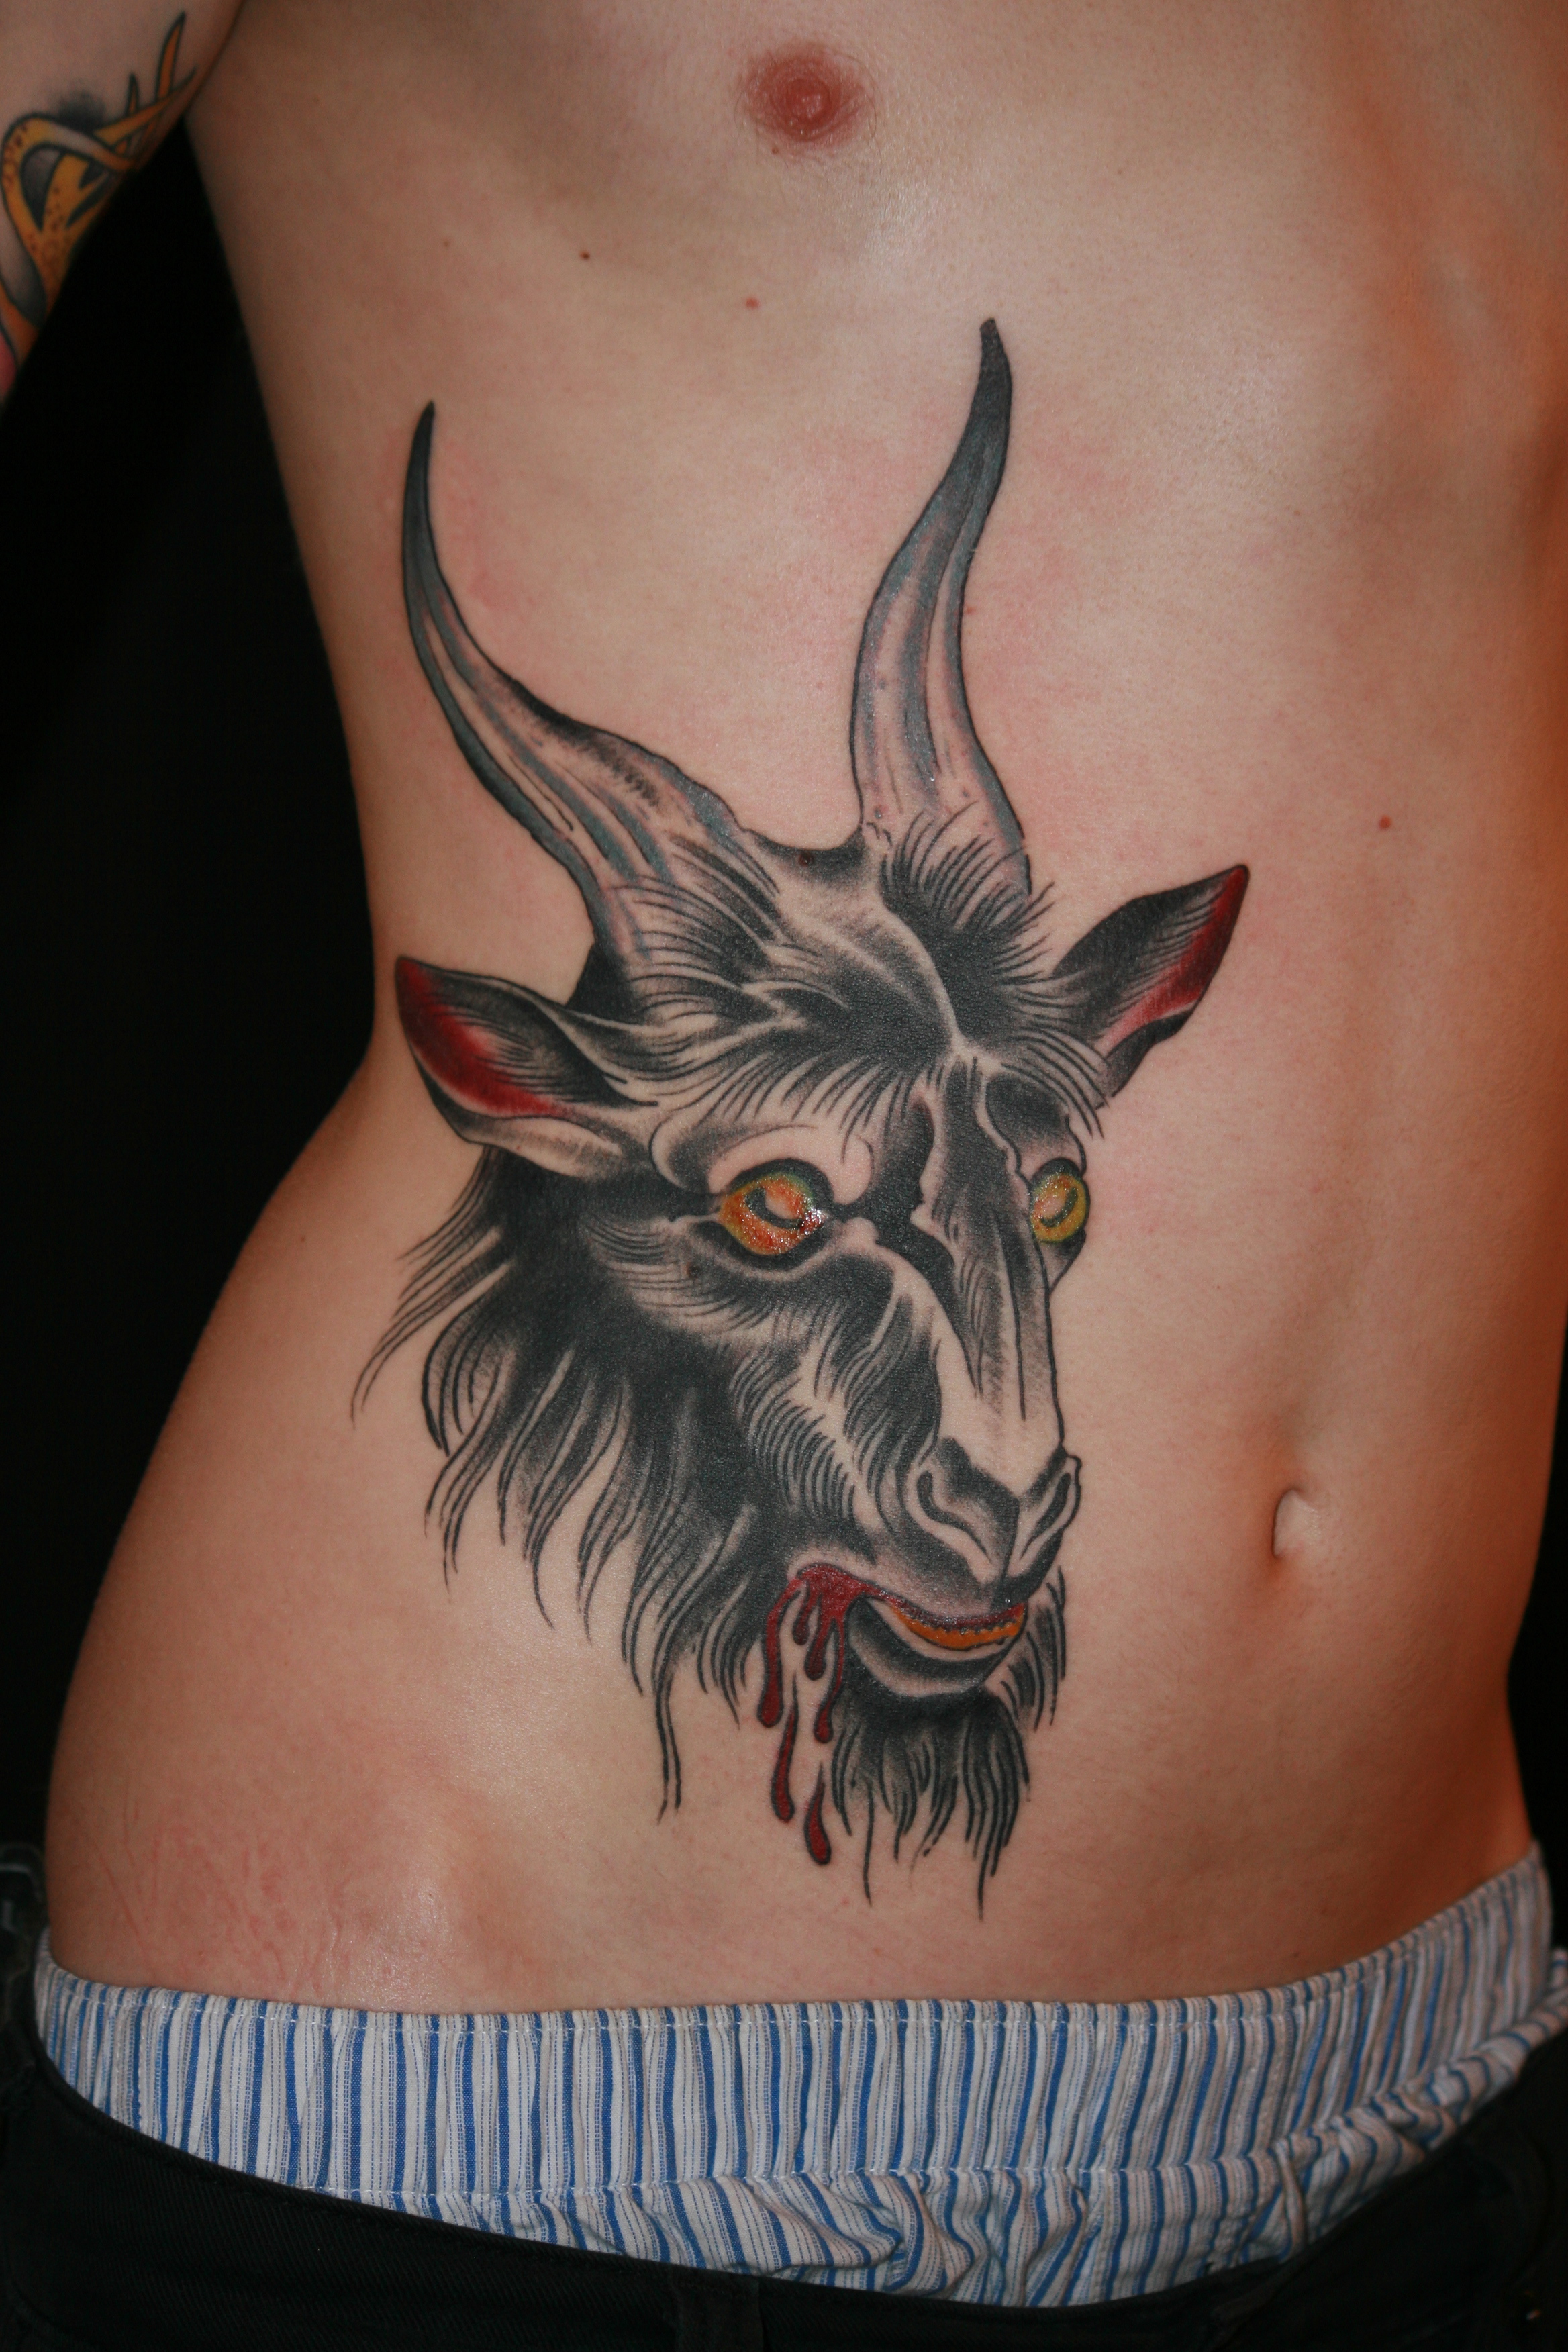 Scary bloody goat tattoo - TattooMagz